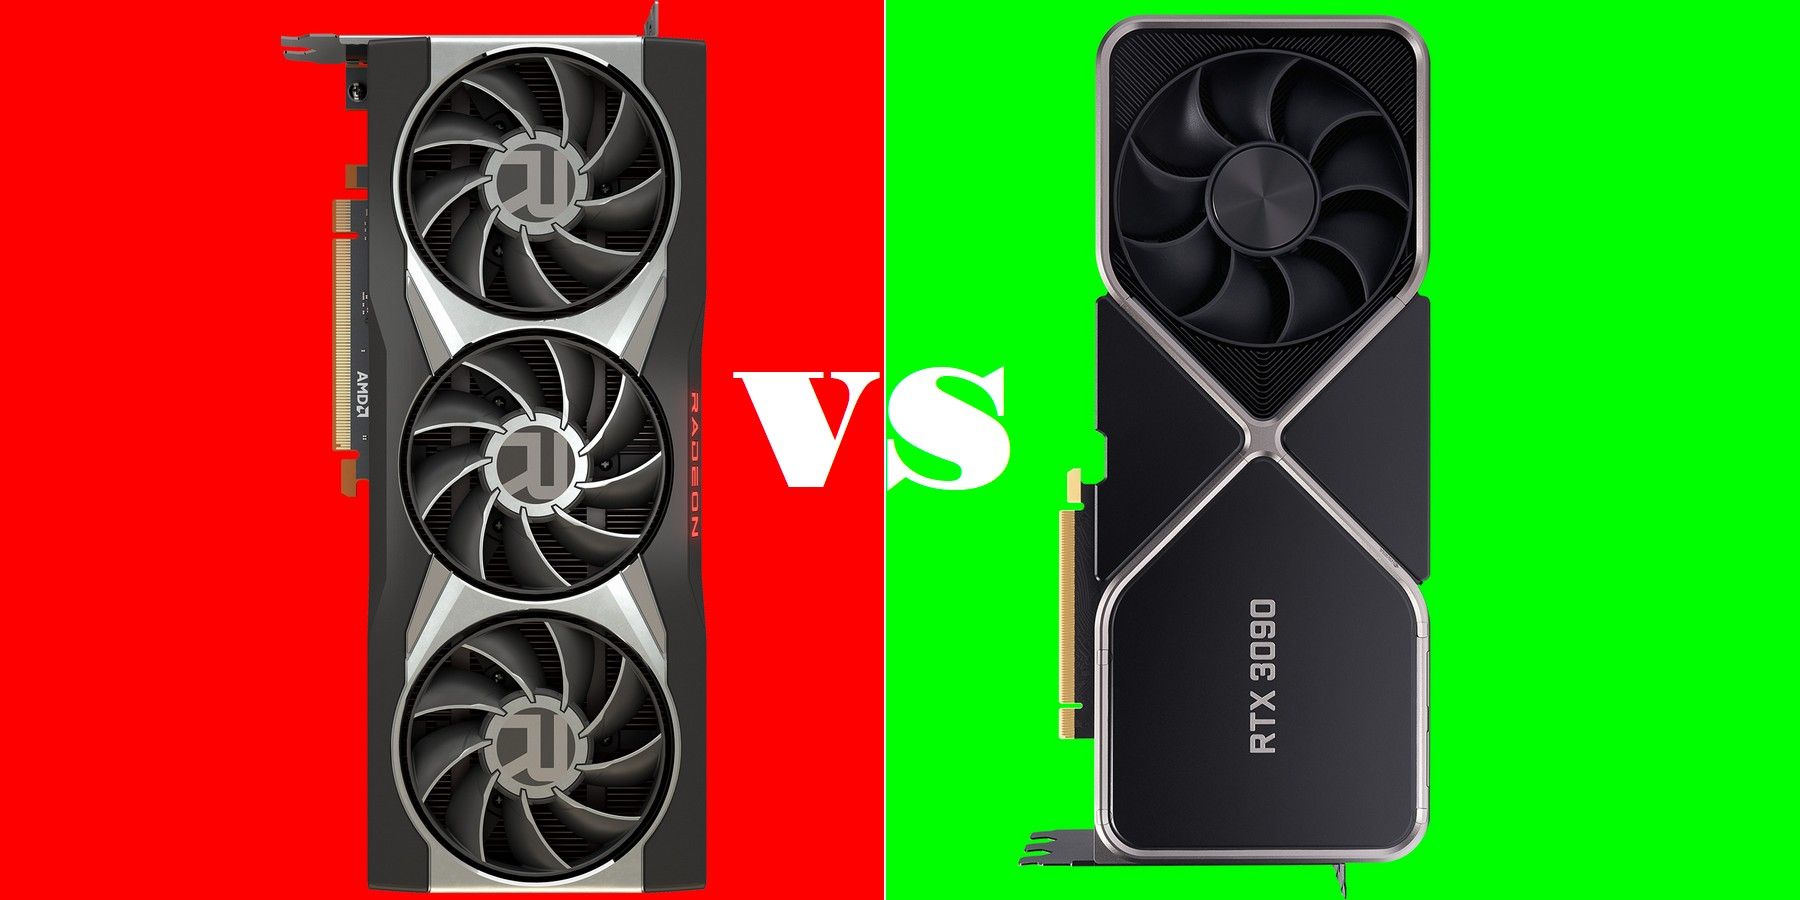 Nvidia RTX 3090 Ti compared with AMD RX 6900 XT